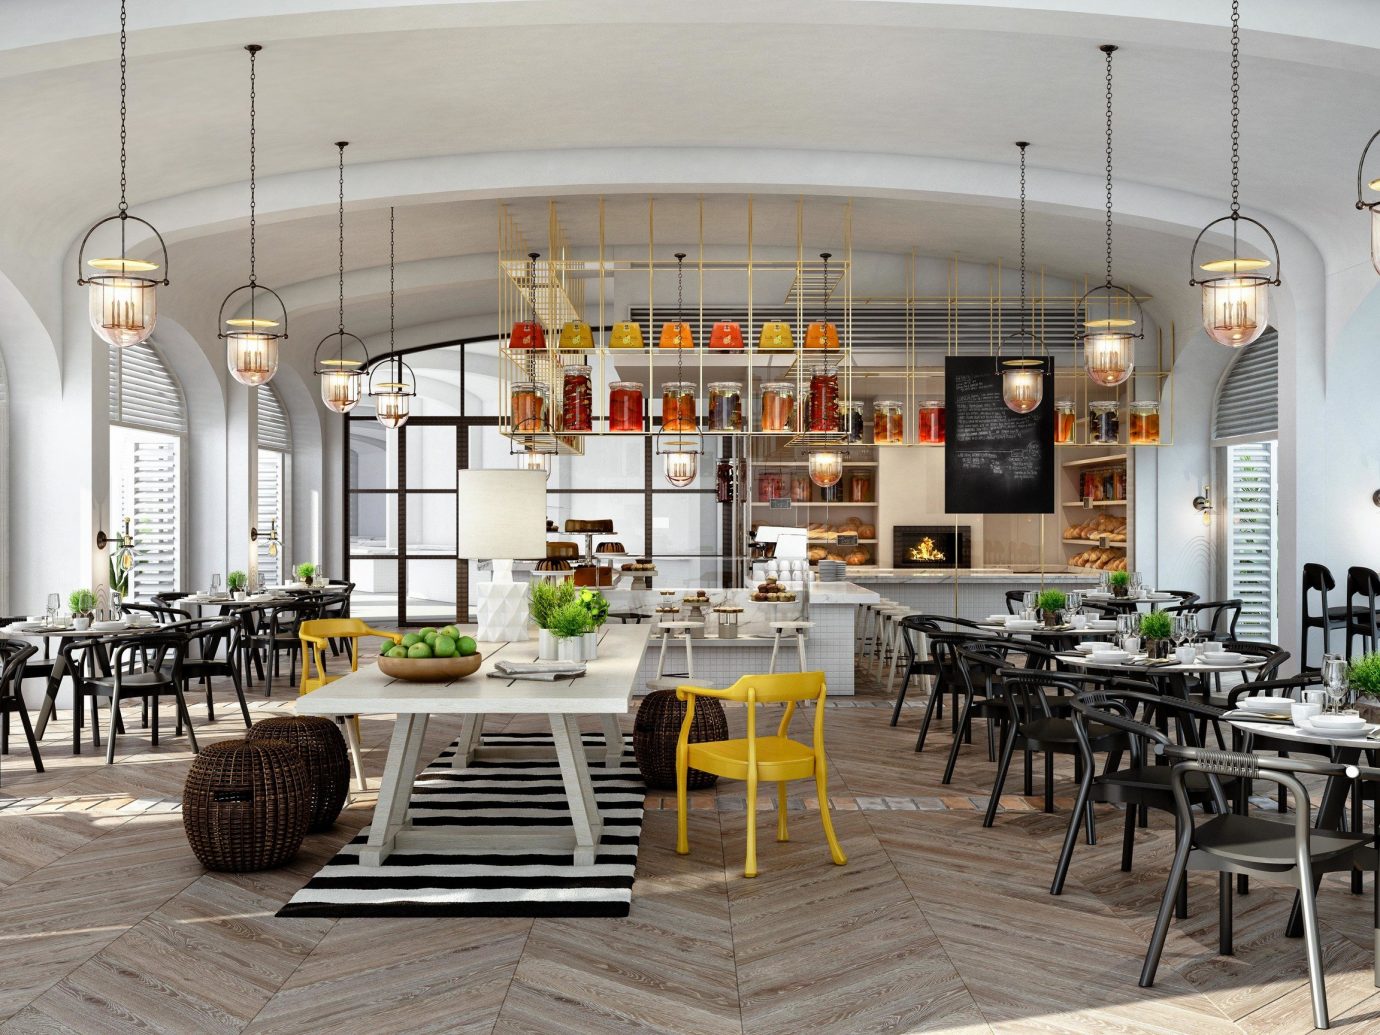 Trip Ideas indoor restaurant interior design café several